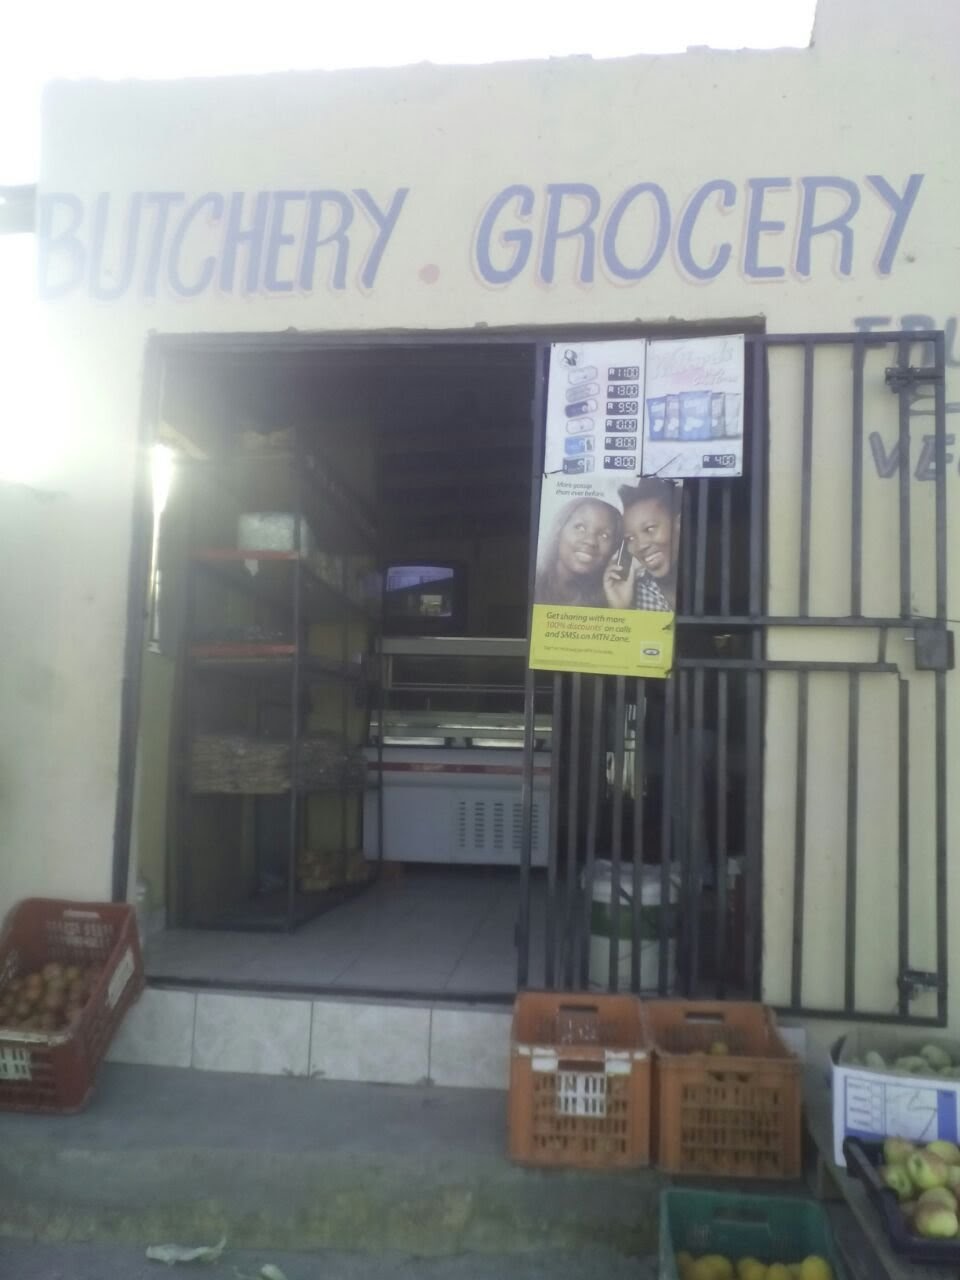 Butchery Grocery